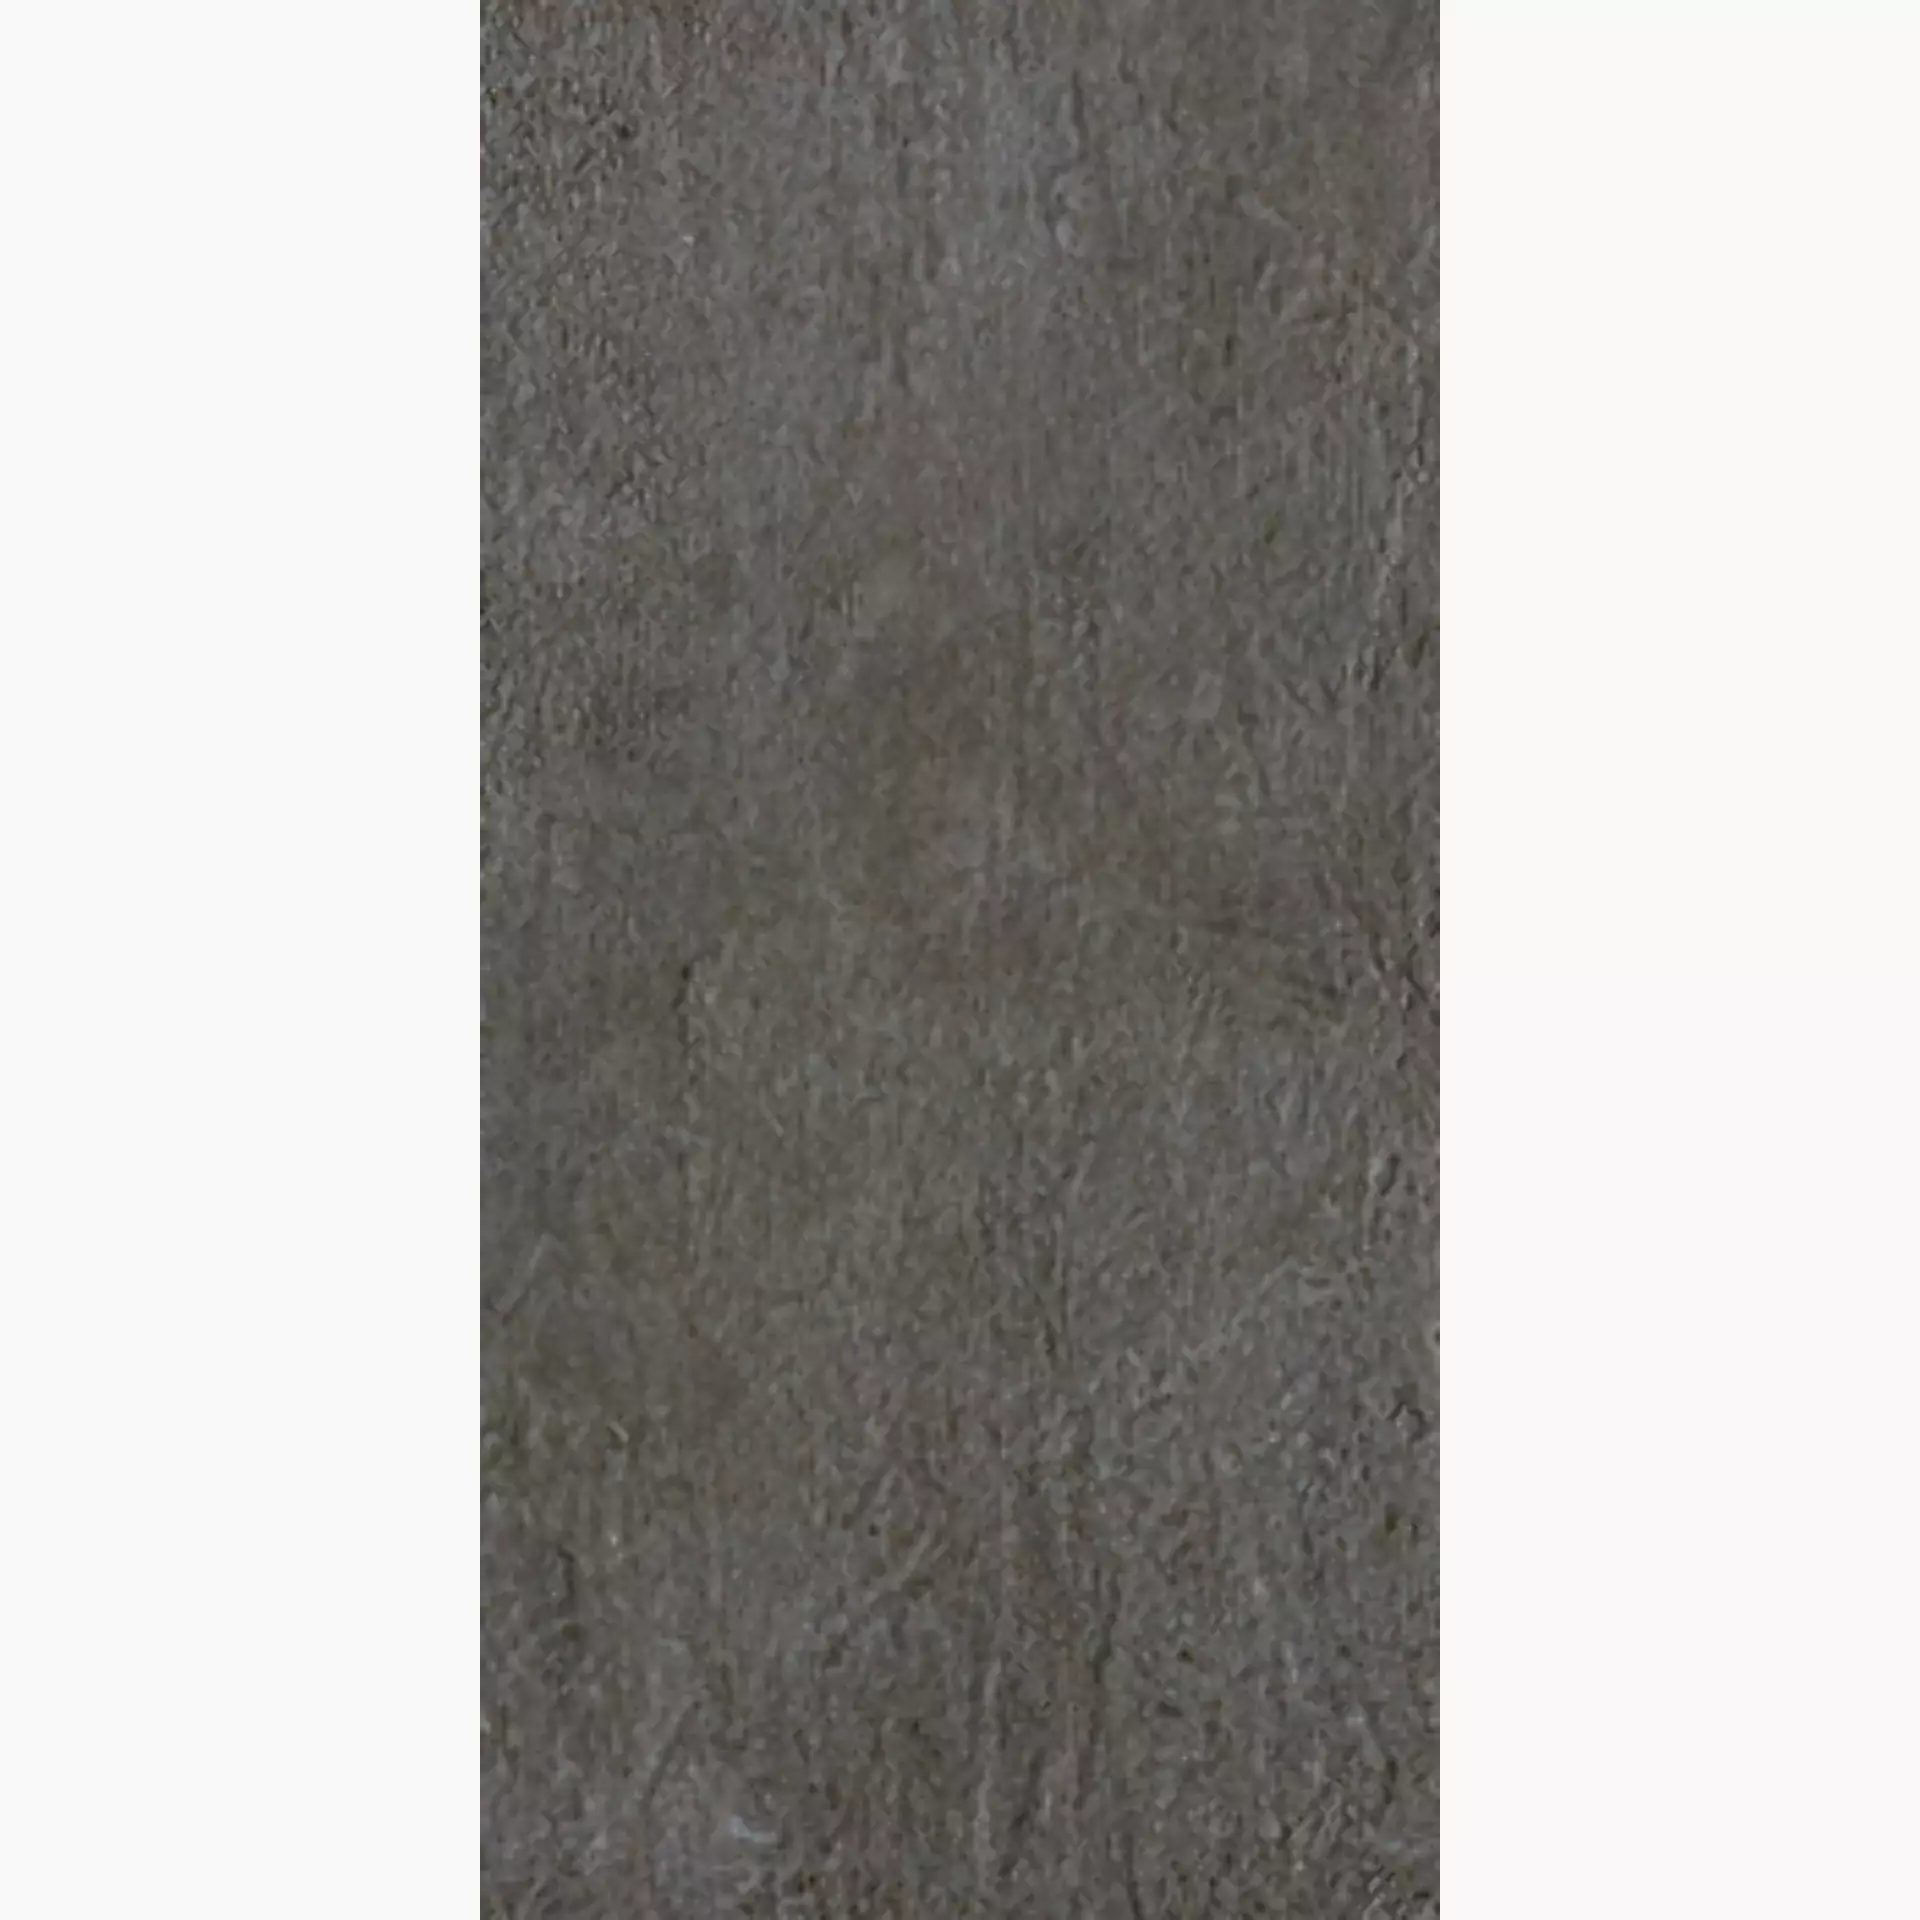 Imola Creative Concrete Dark grey Natural Slate Cut Matt fondi 45x90cm rectified 10mm - CREACON 49DG